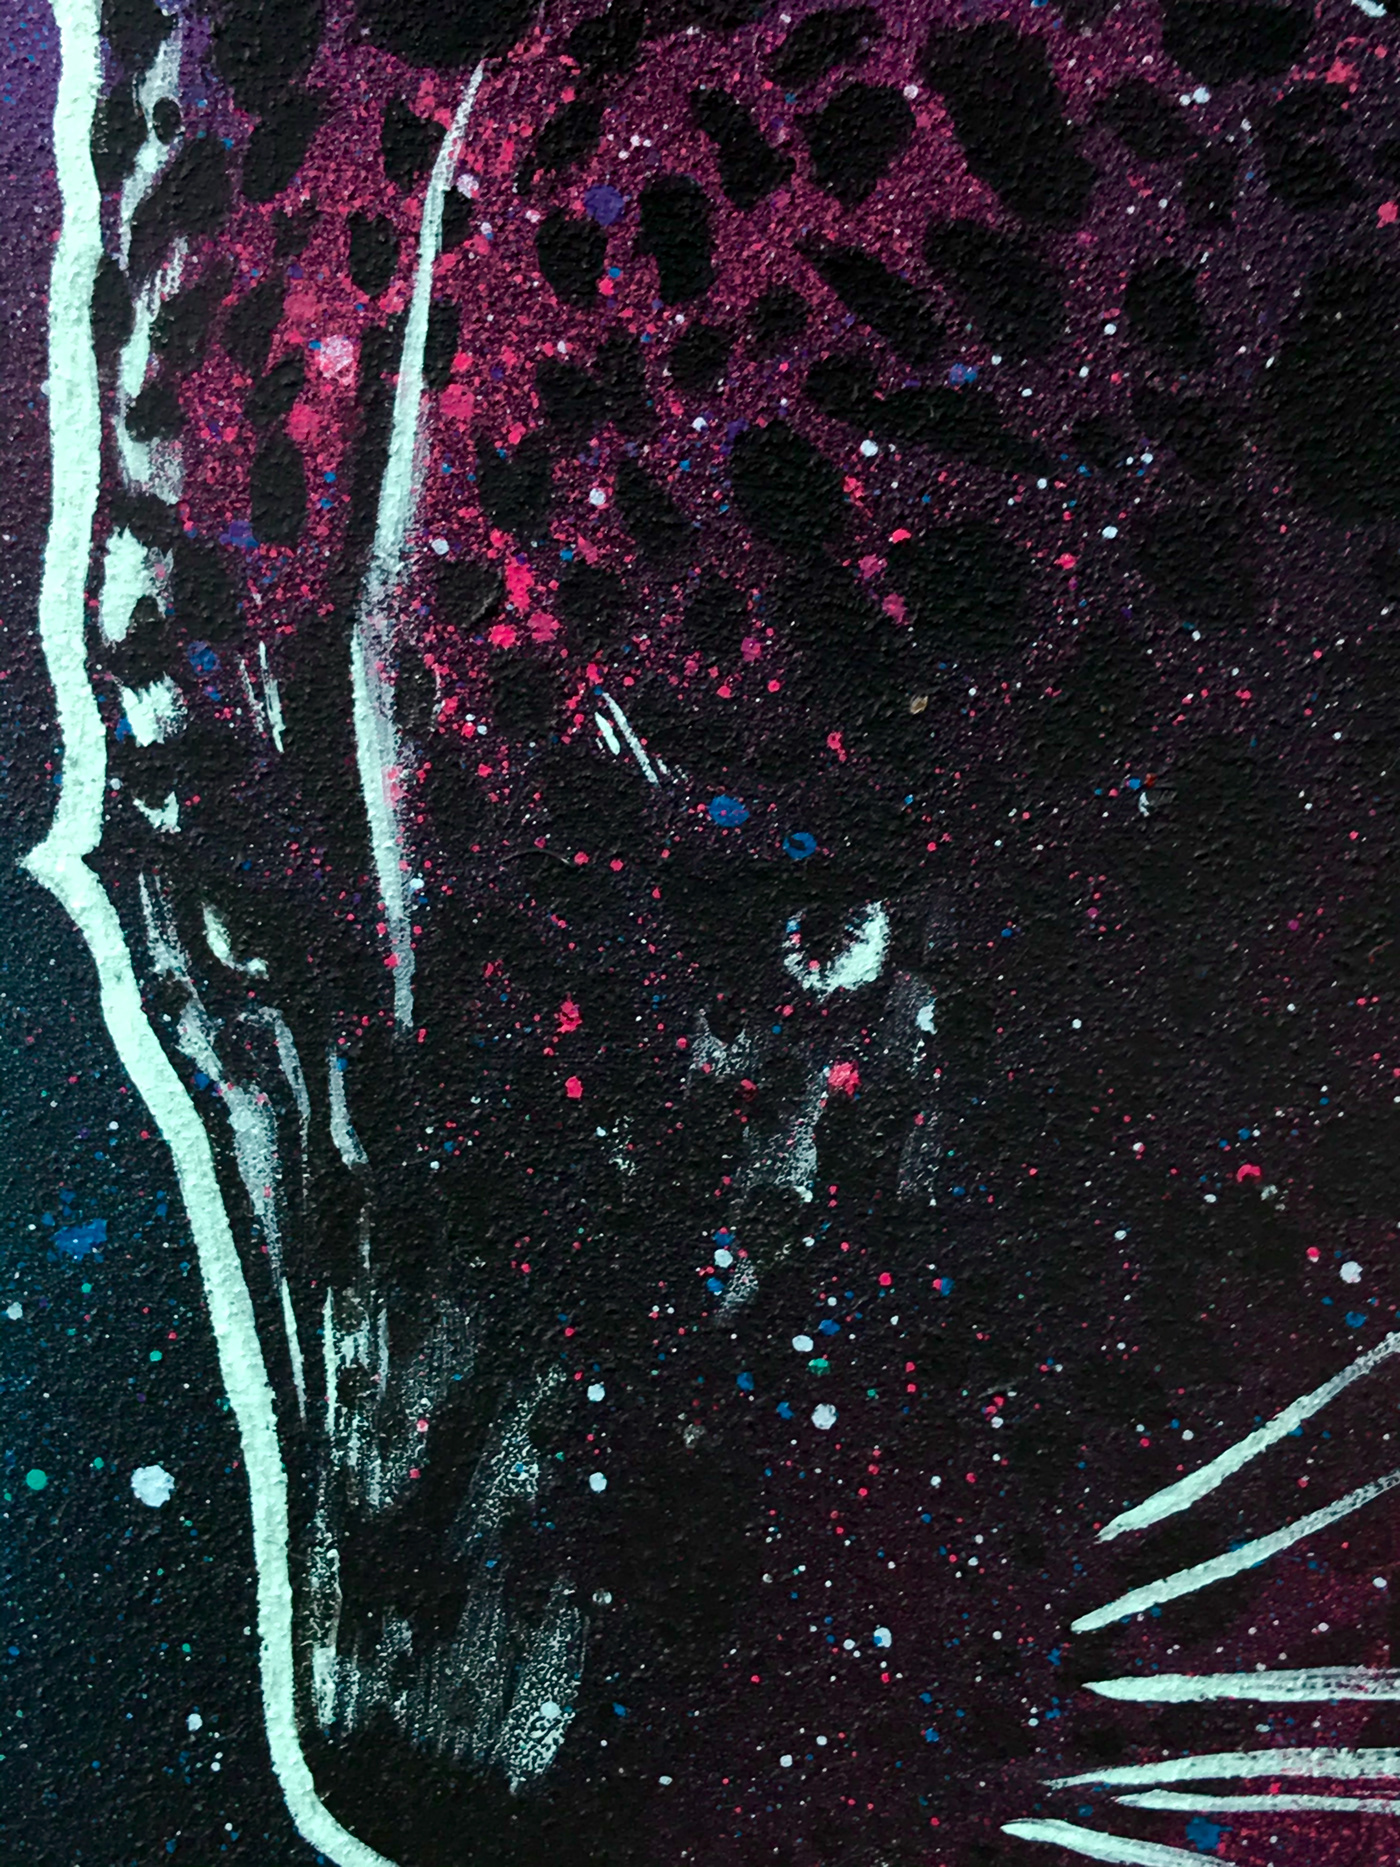 Cat cosmos jaguar painting   Space 